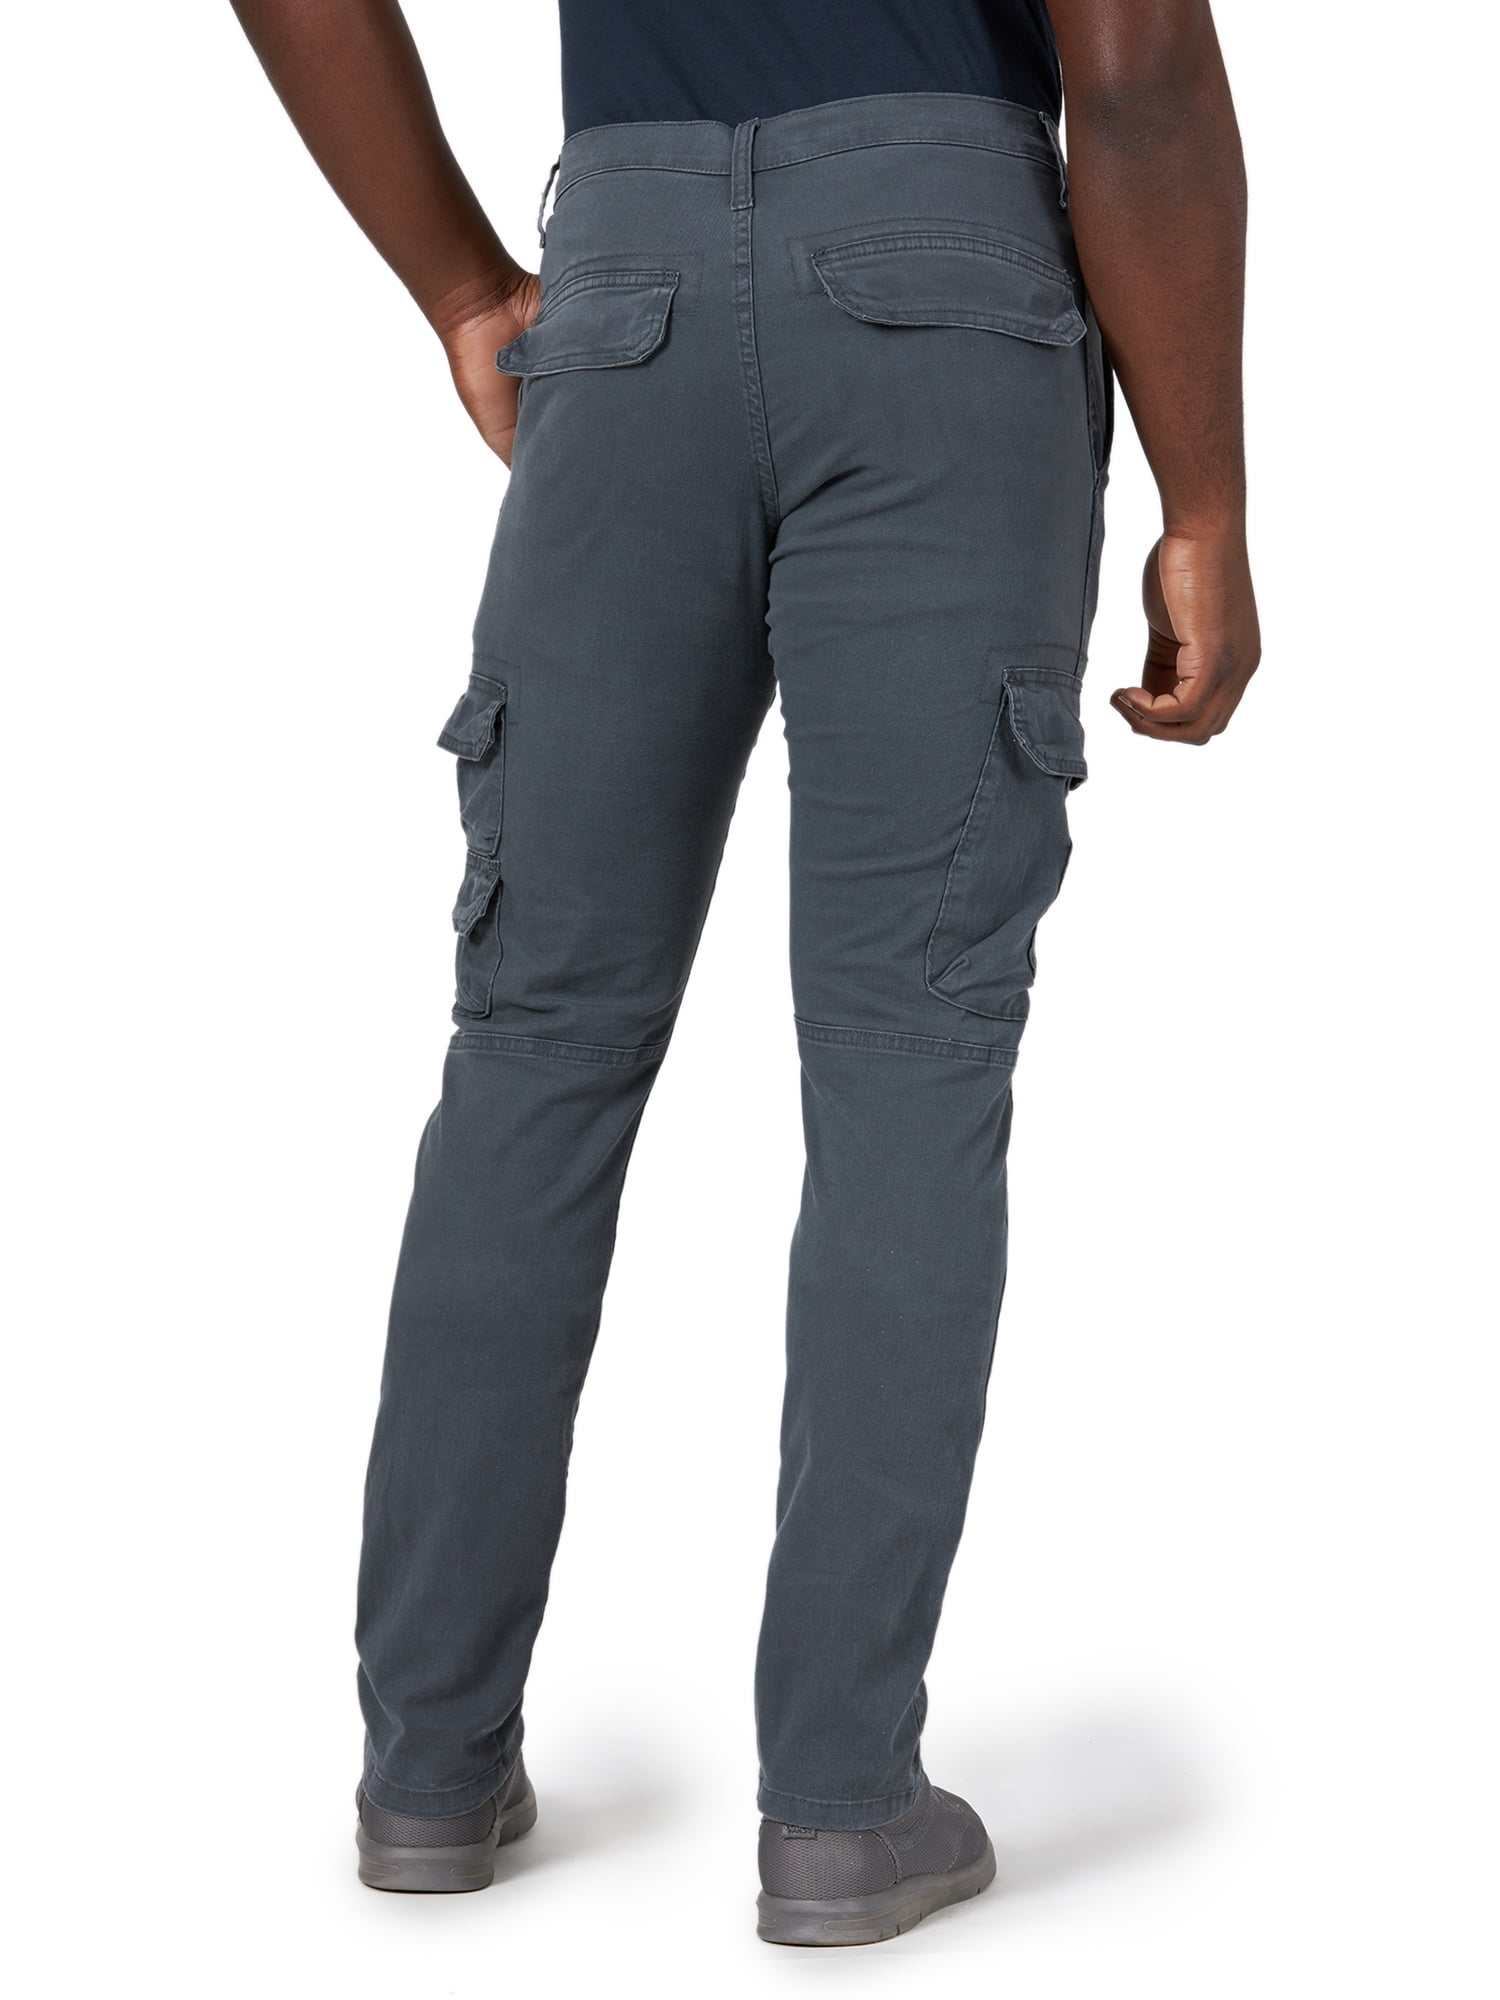 WRANGLER COMFORT SOLUTION Series Regular Fit Jean Comfort Flex Waistband  Mens $38.99 - PicClick